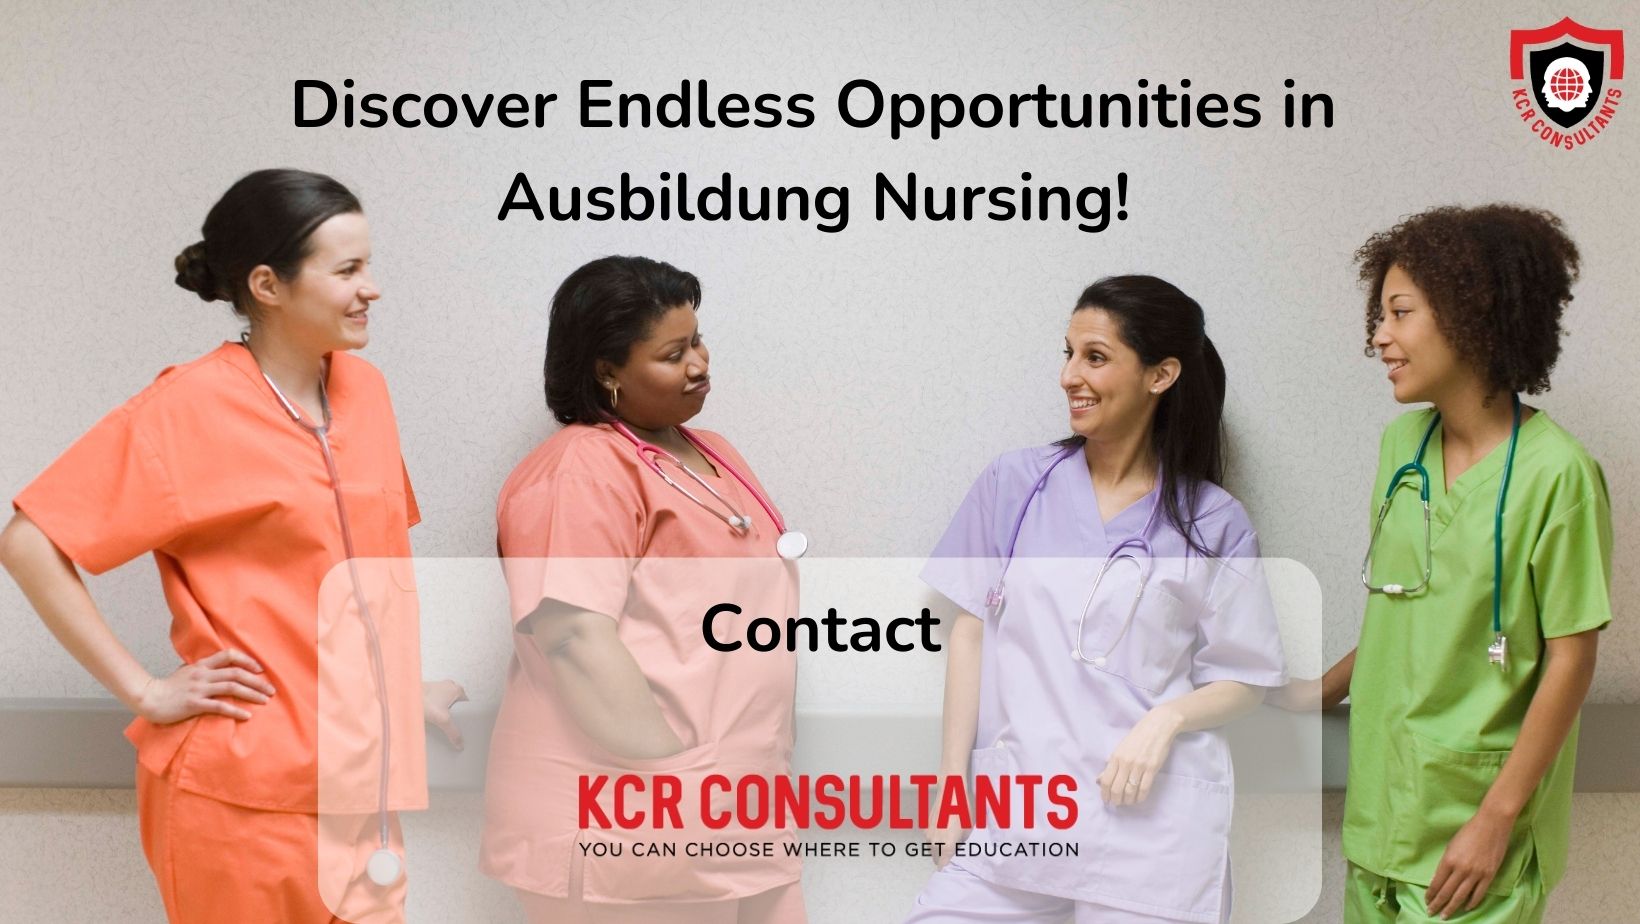 Ausbildung Nursing - KCR CONSULTANTS - Contact us